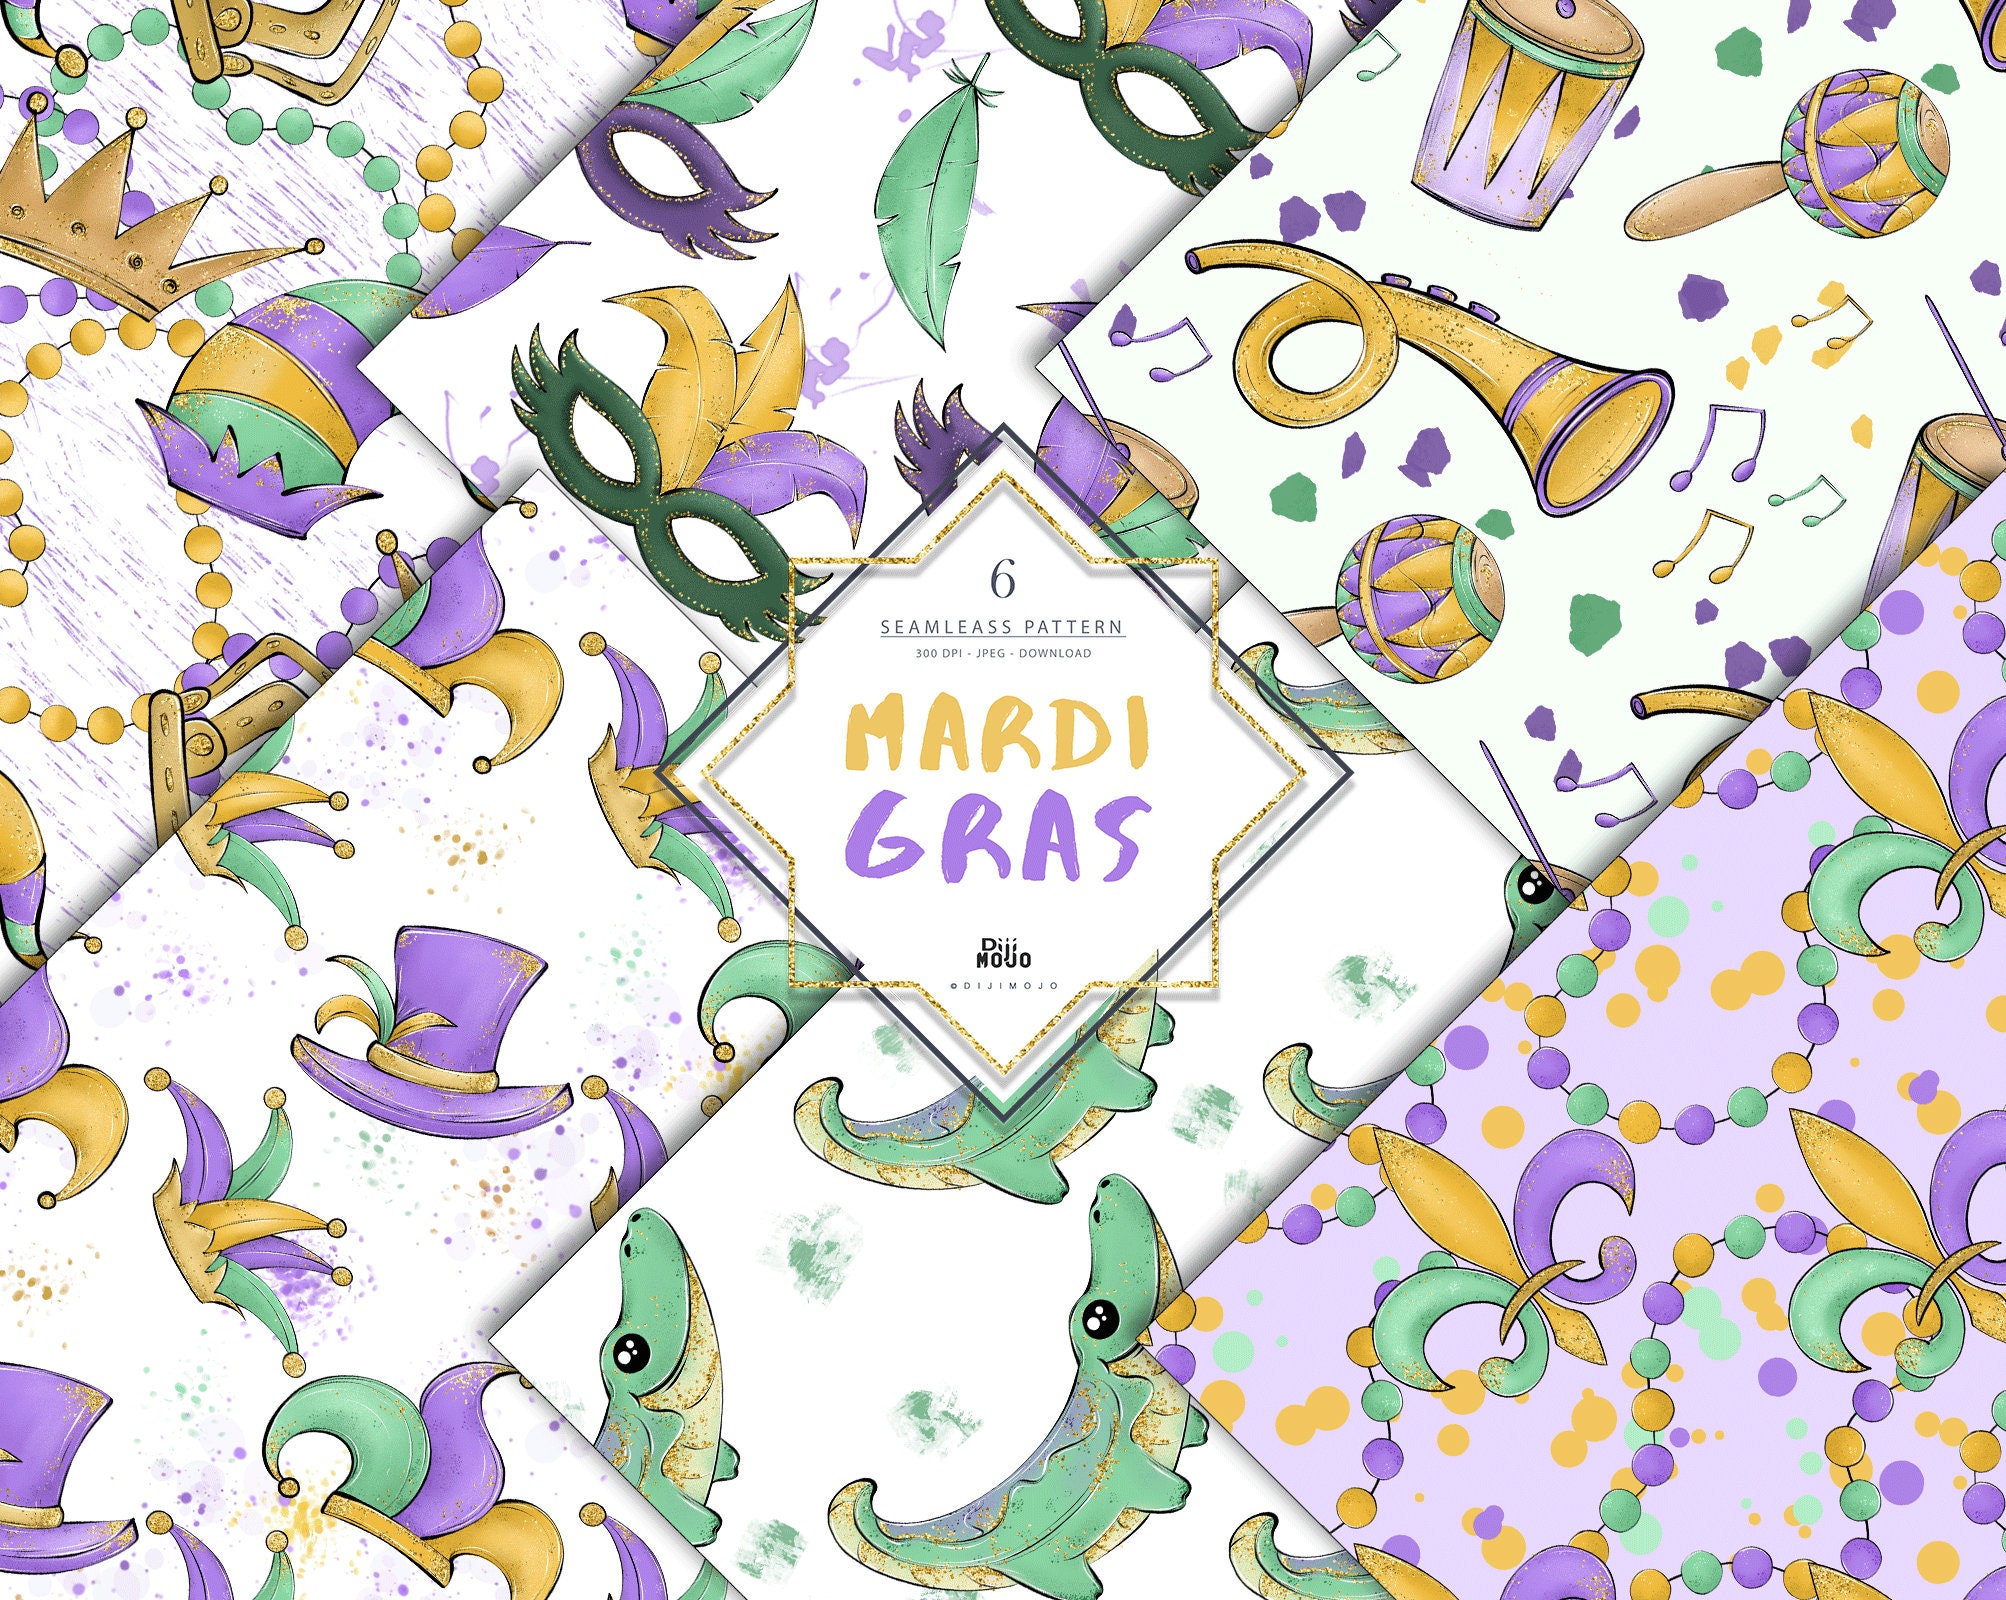 Mardi Gras Seamless Pattern #310911 - TemplateMonster